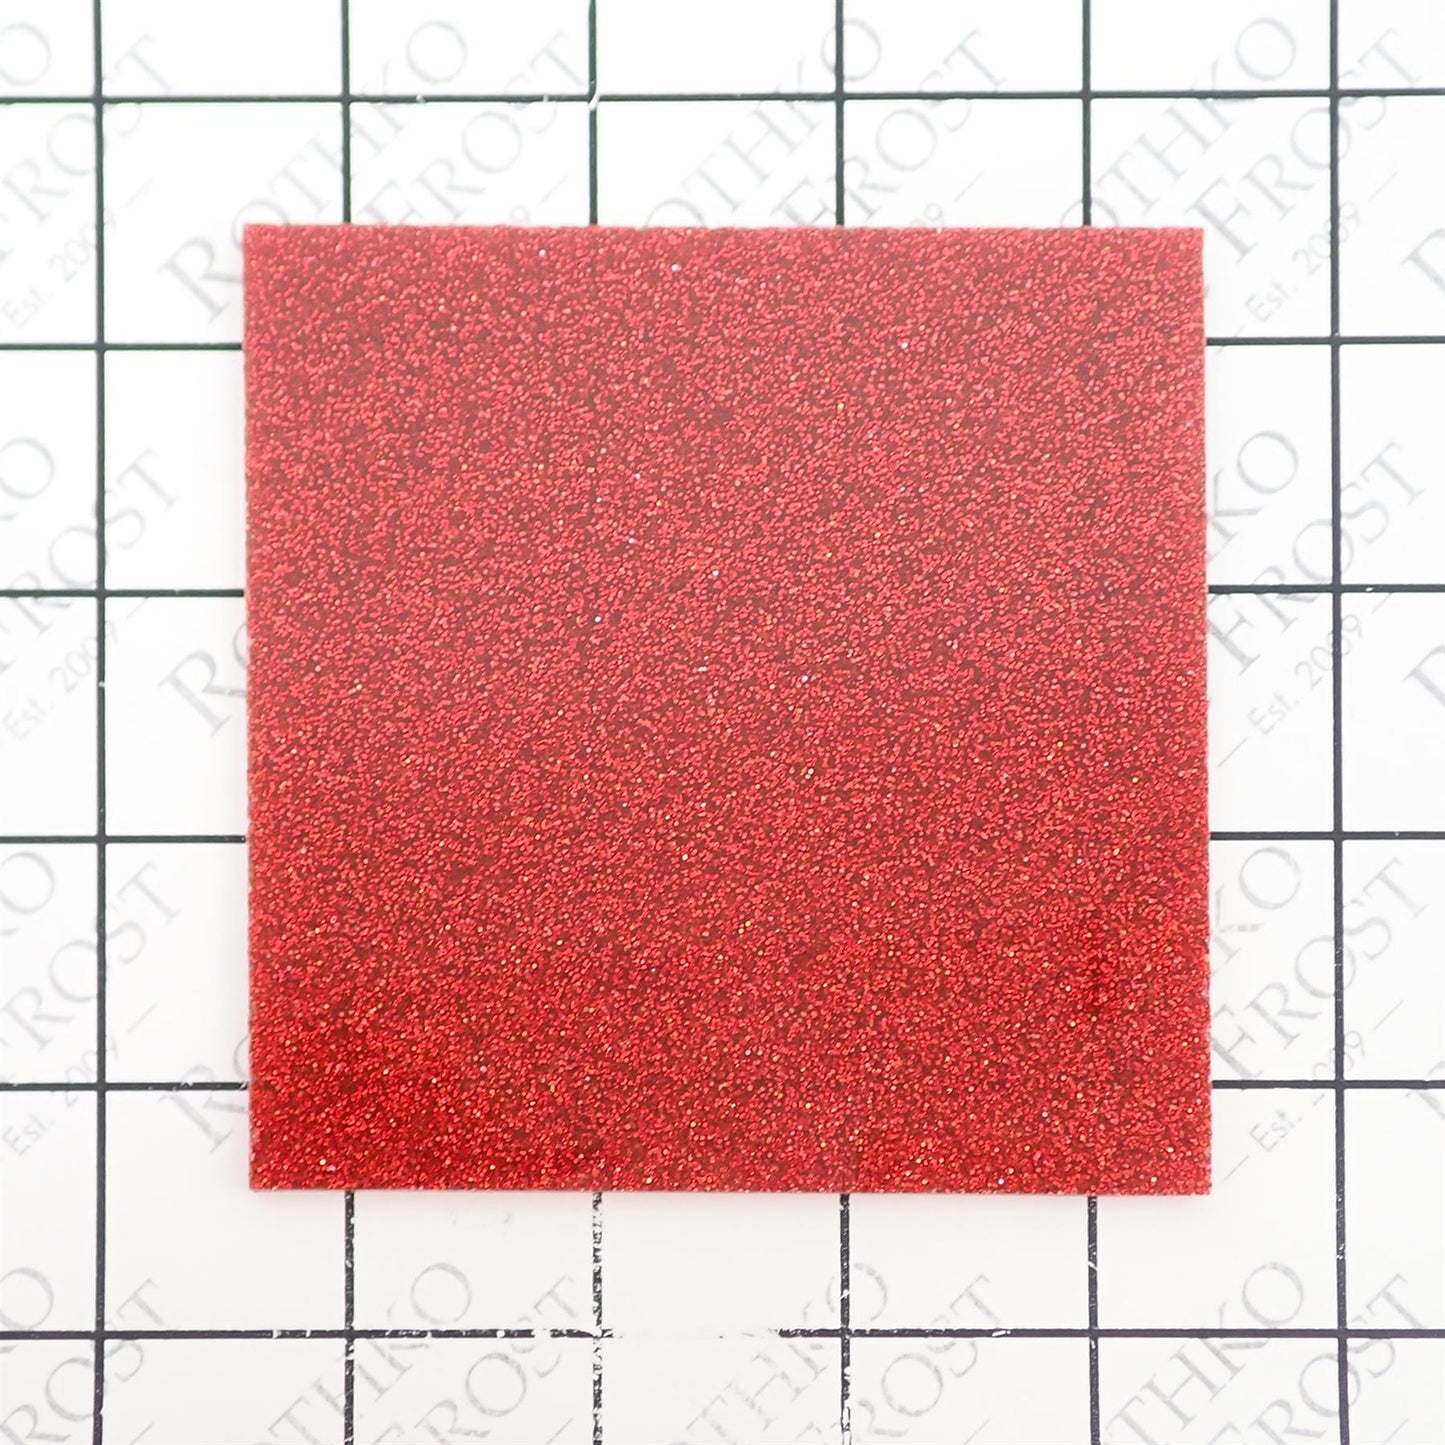 Incudo Red 2-Sided Glitter Acrylic Sheet - 400x300x3mm (15.7x11.81x0.12")